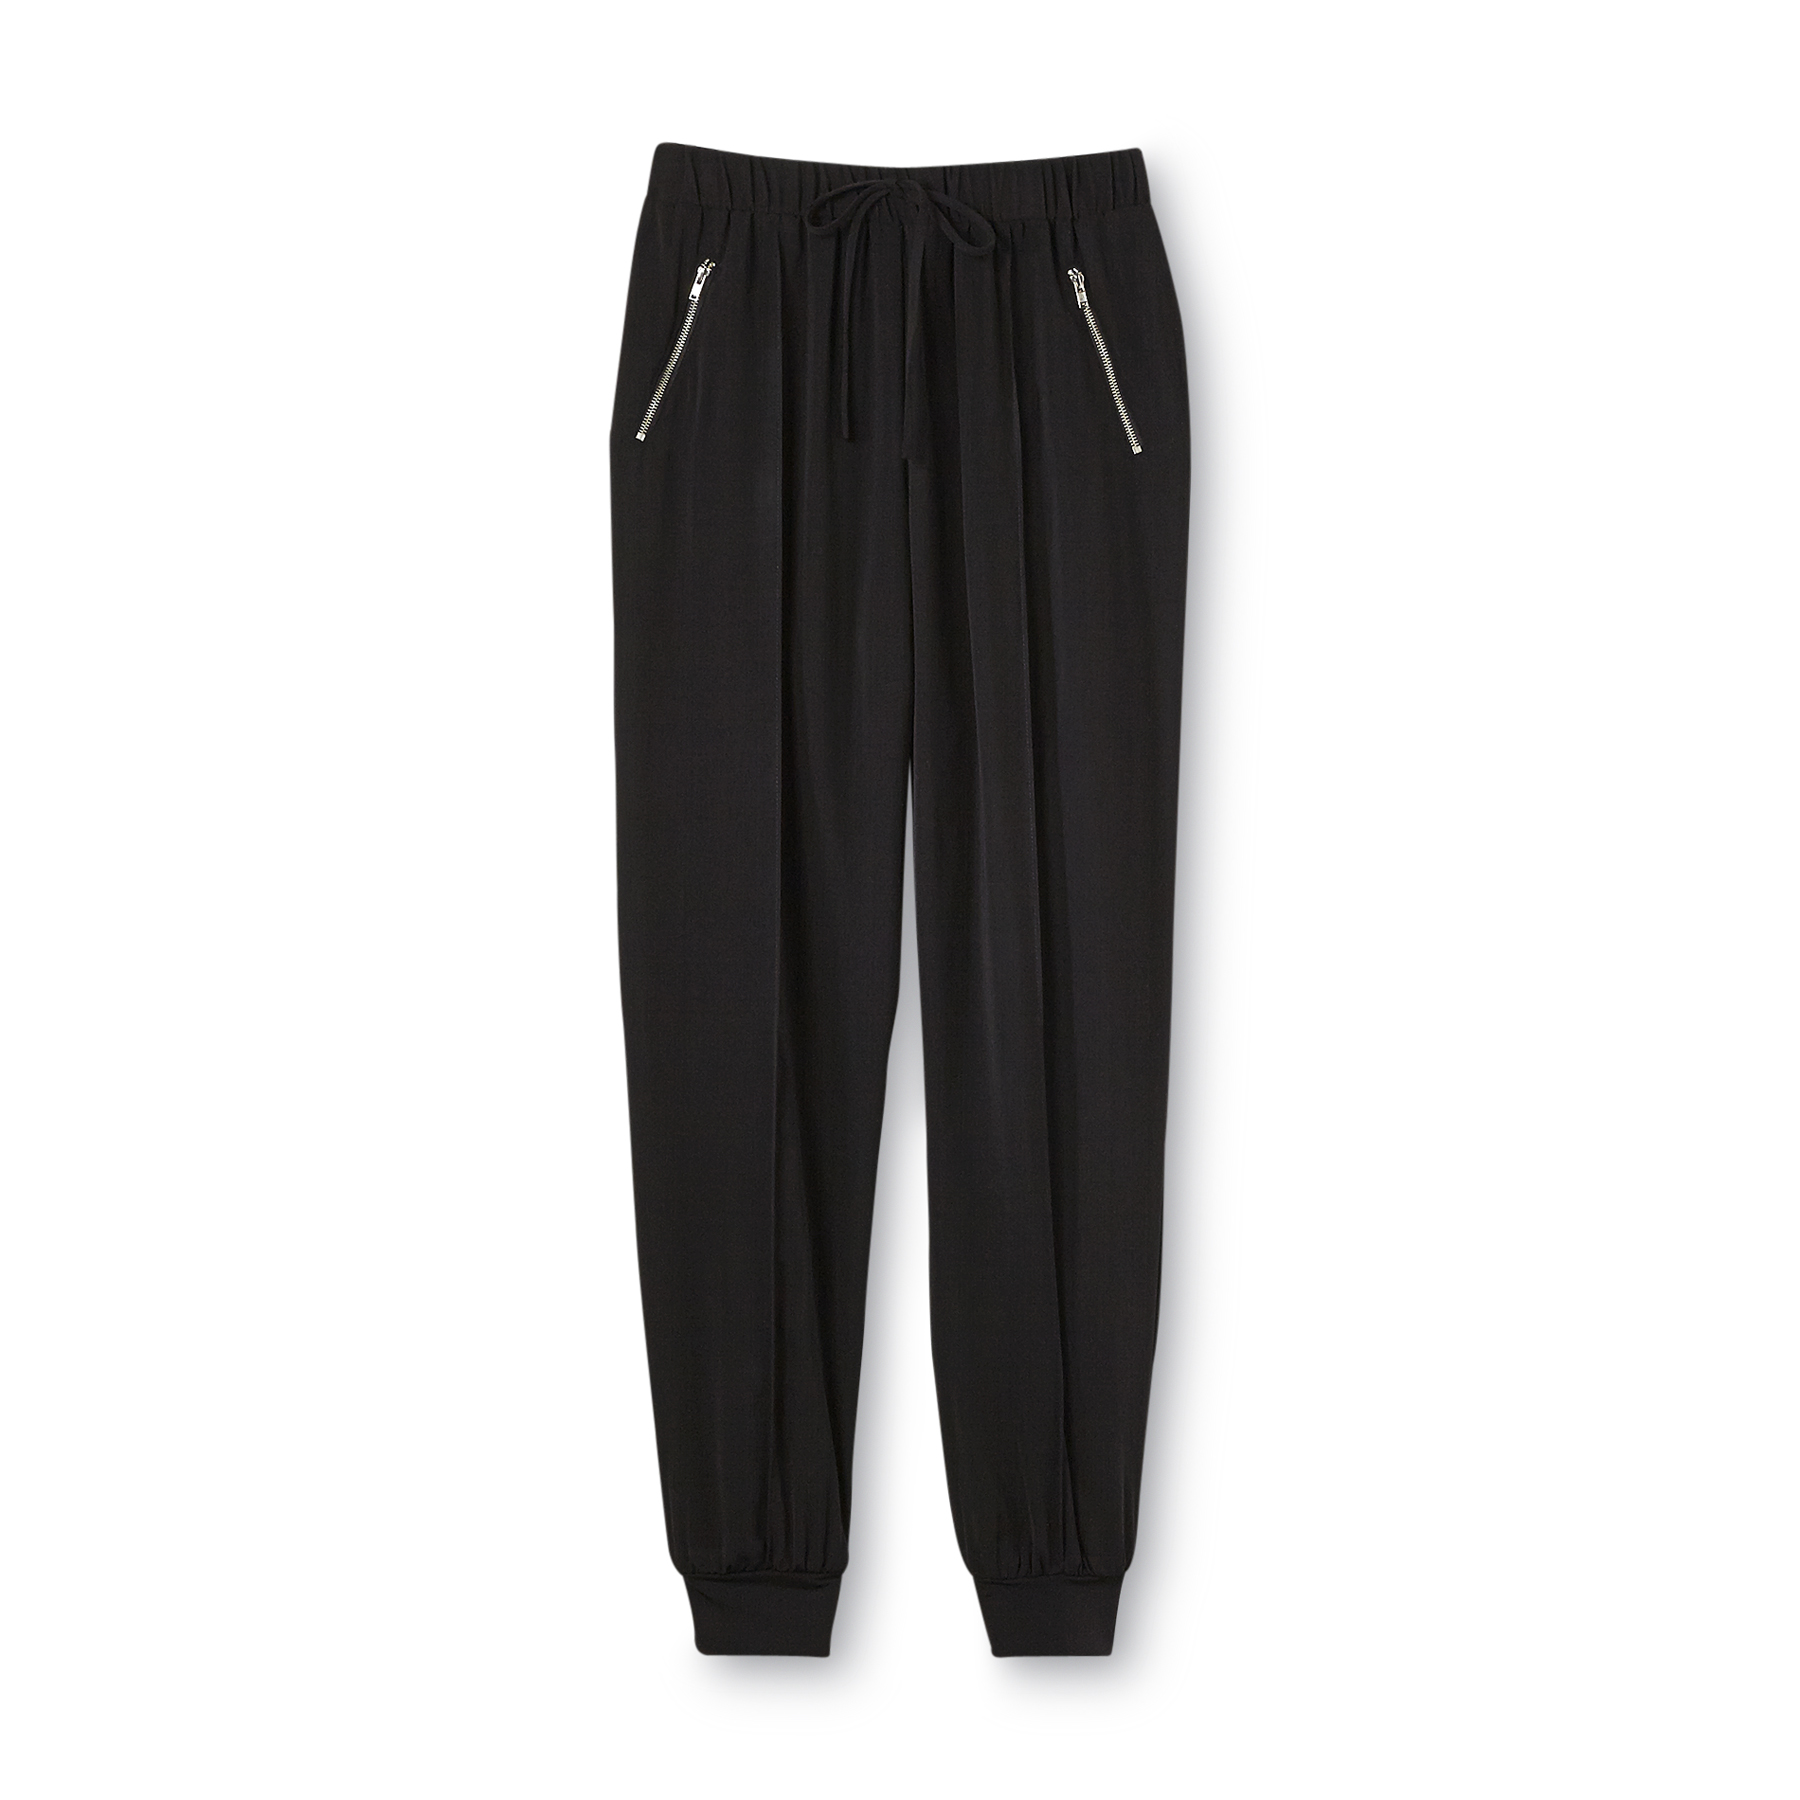 Bongo Women's Solid Black Bottom w/ Zipper Pockets Pants